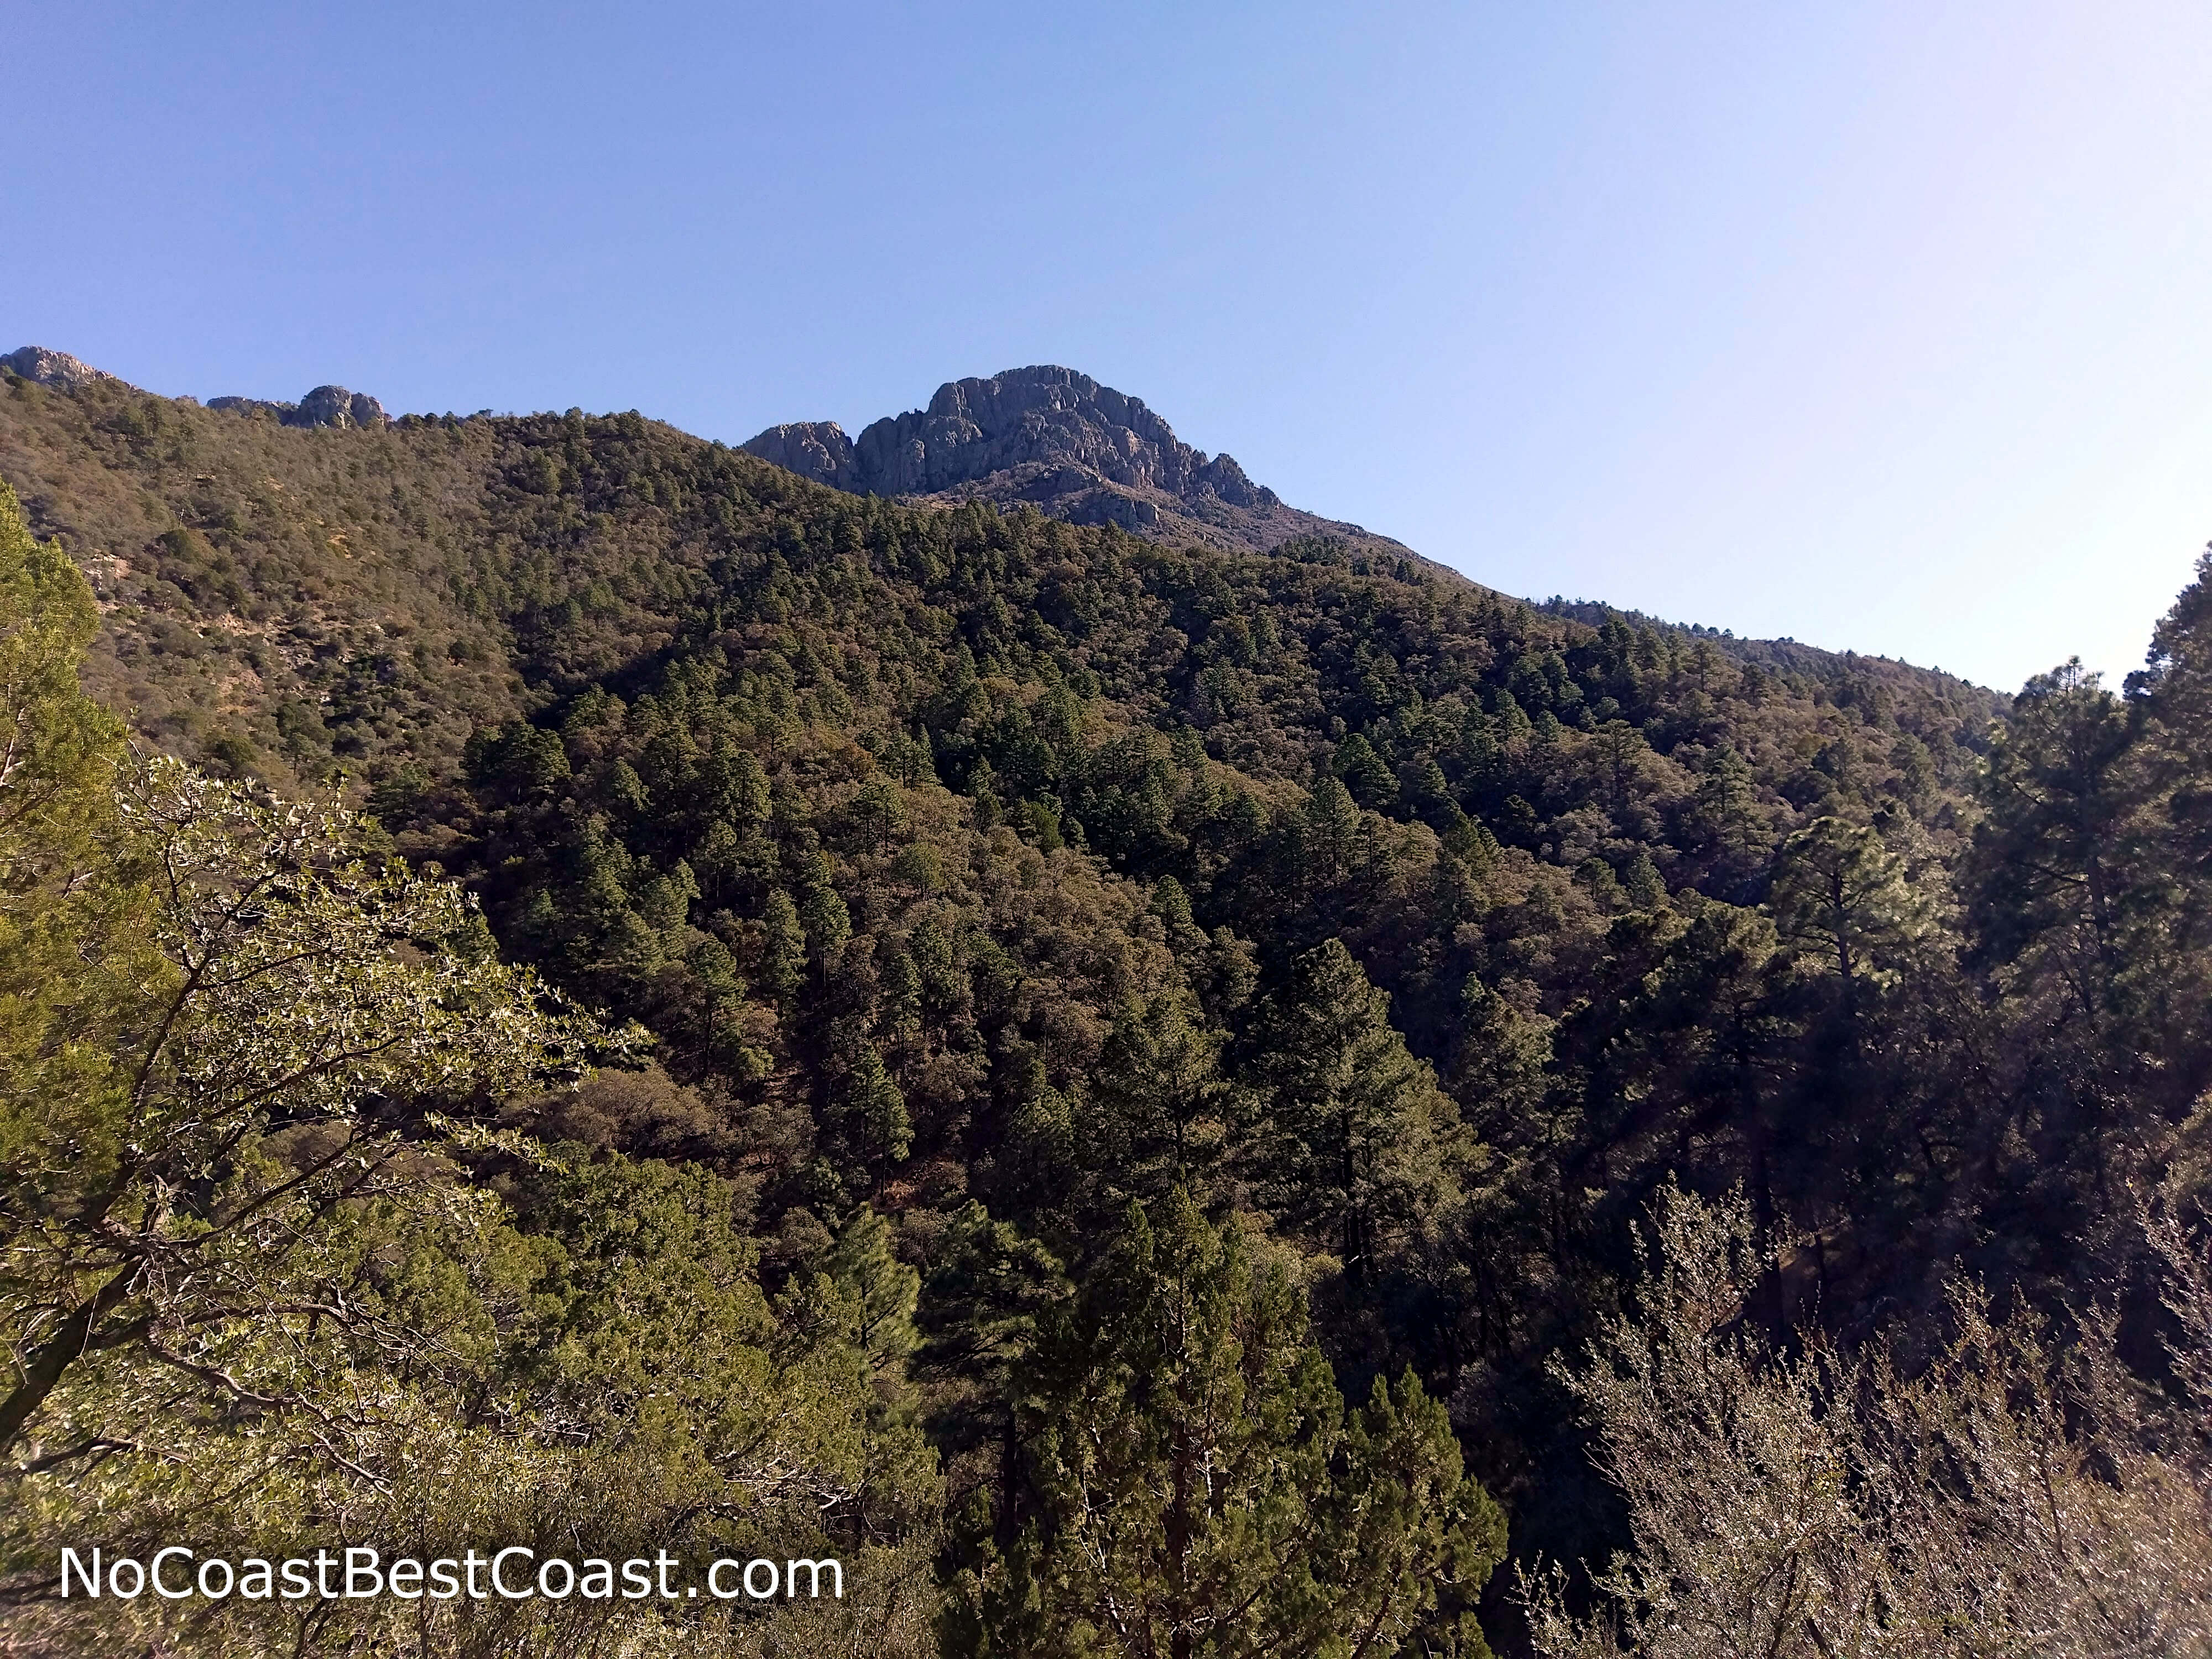 Rocky Mount Wrightson looms above the treeline